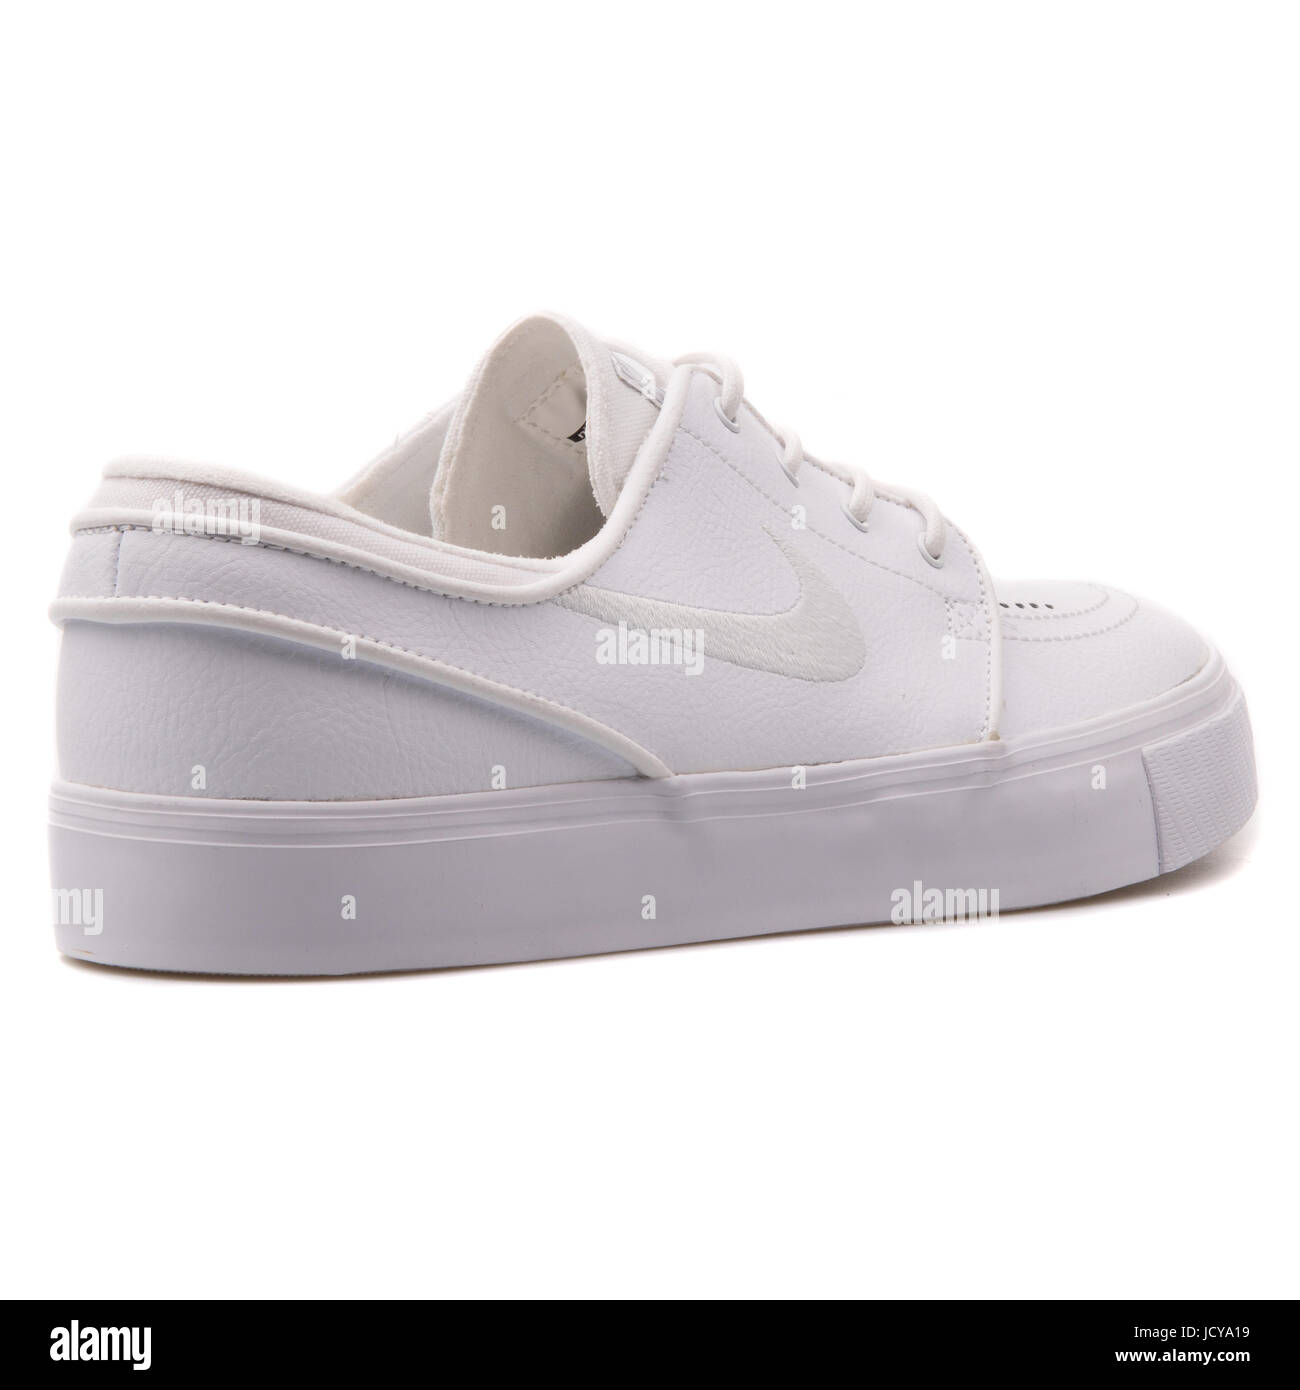 Nike Zoom Stefan Janoski L White Leather Men's Skateboarding Shoes -  616490-110 Stock Photo - Alamy